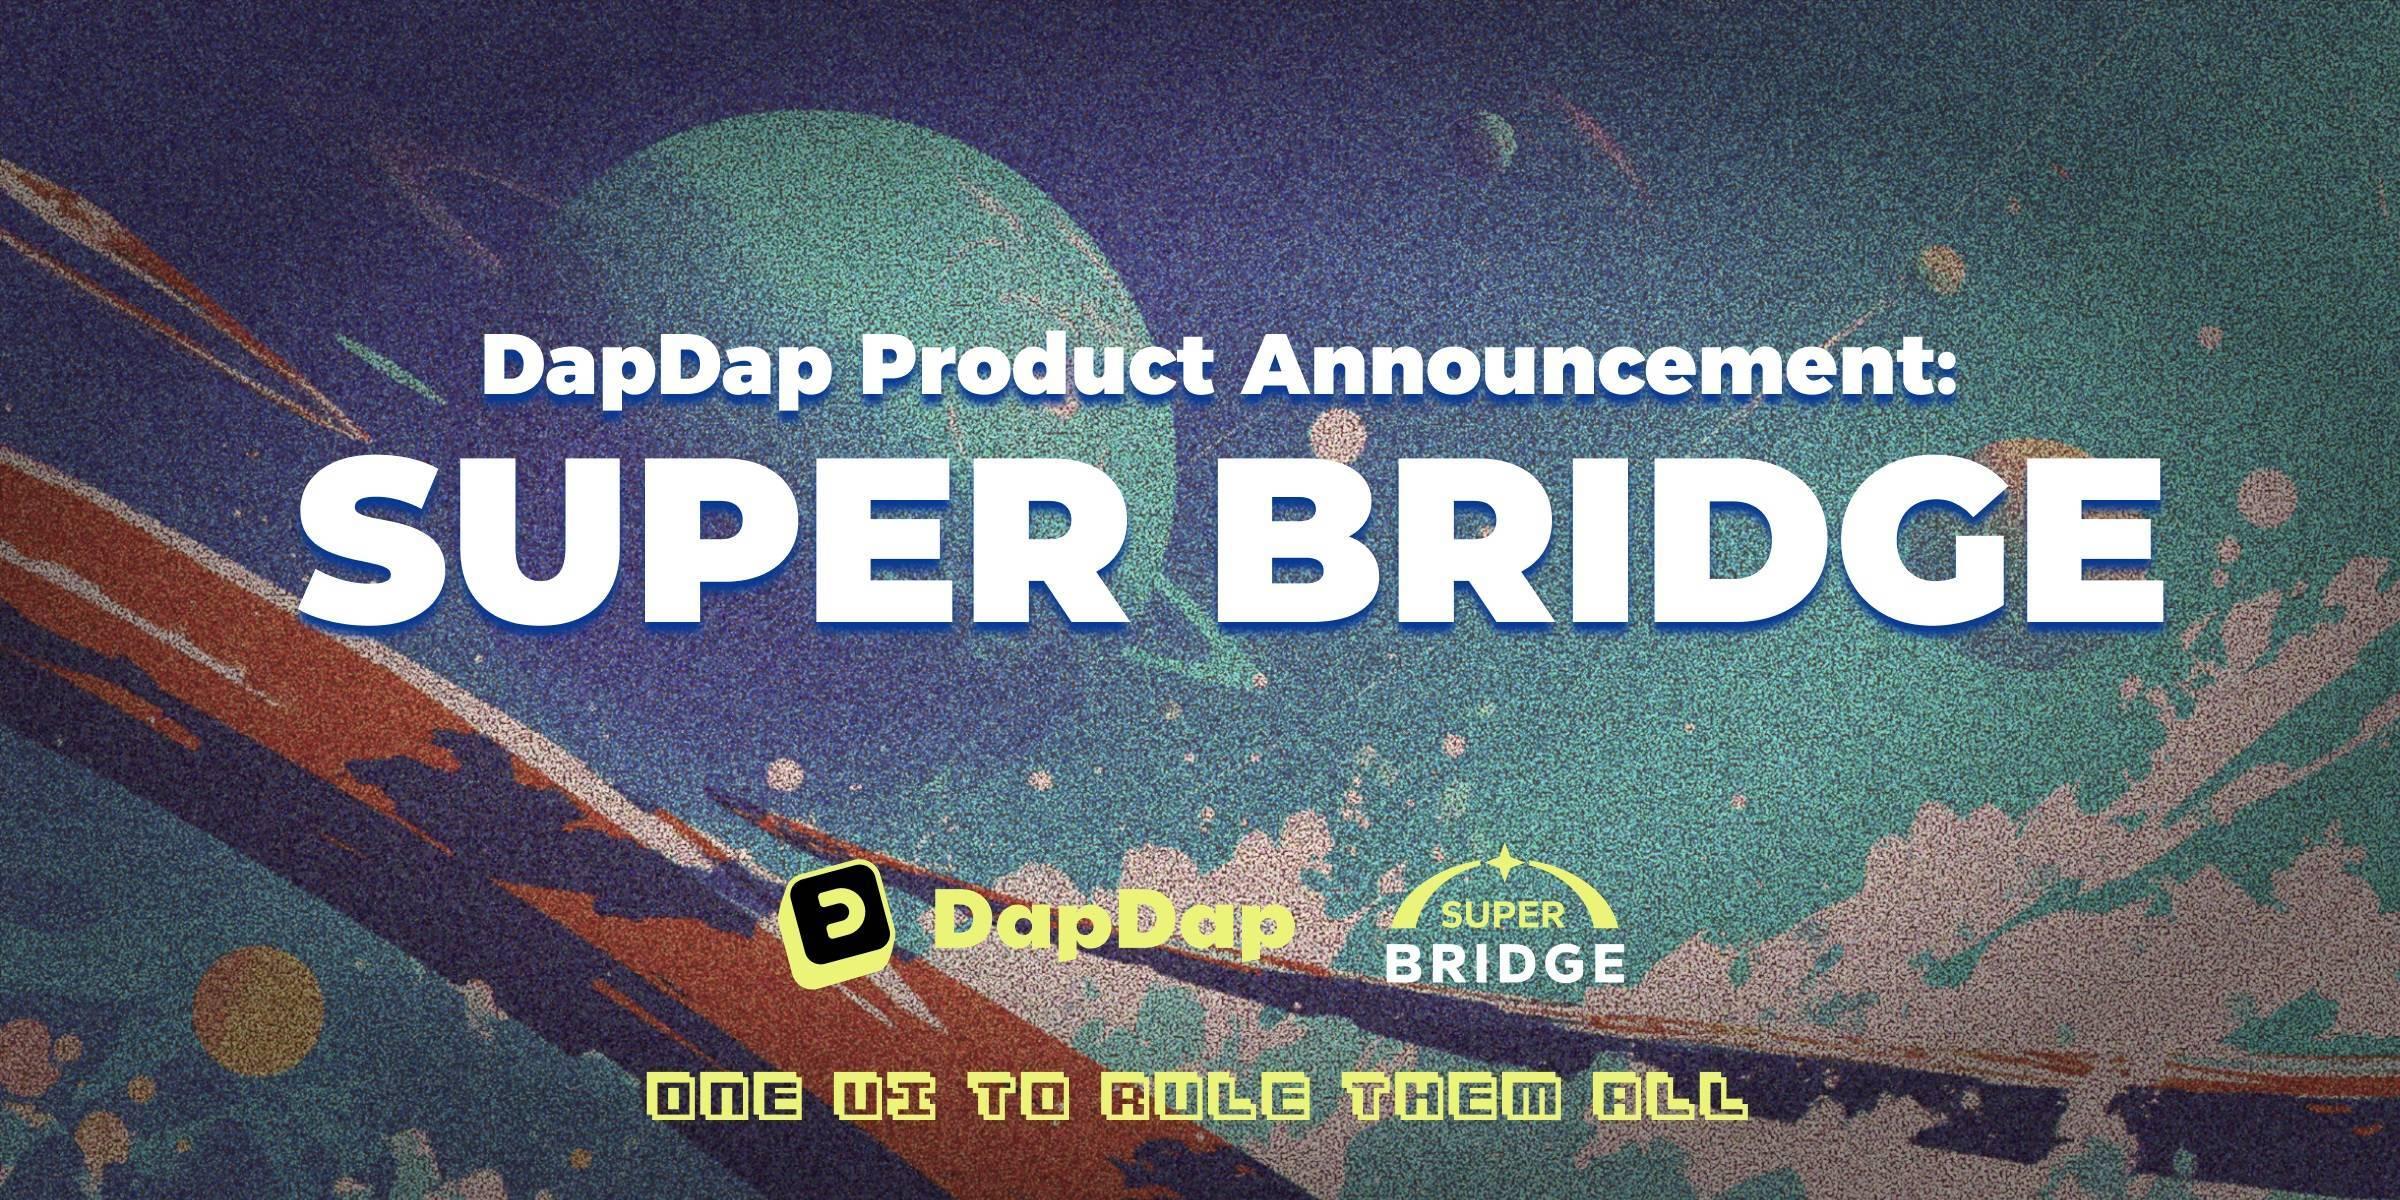 dapdap-ra-mat-super-bridge-voi ...